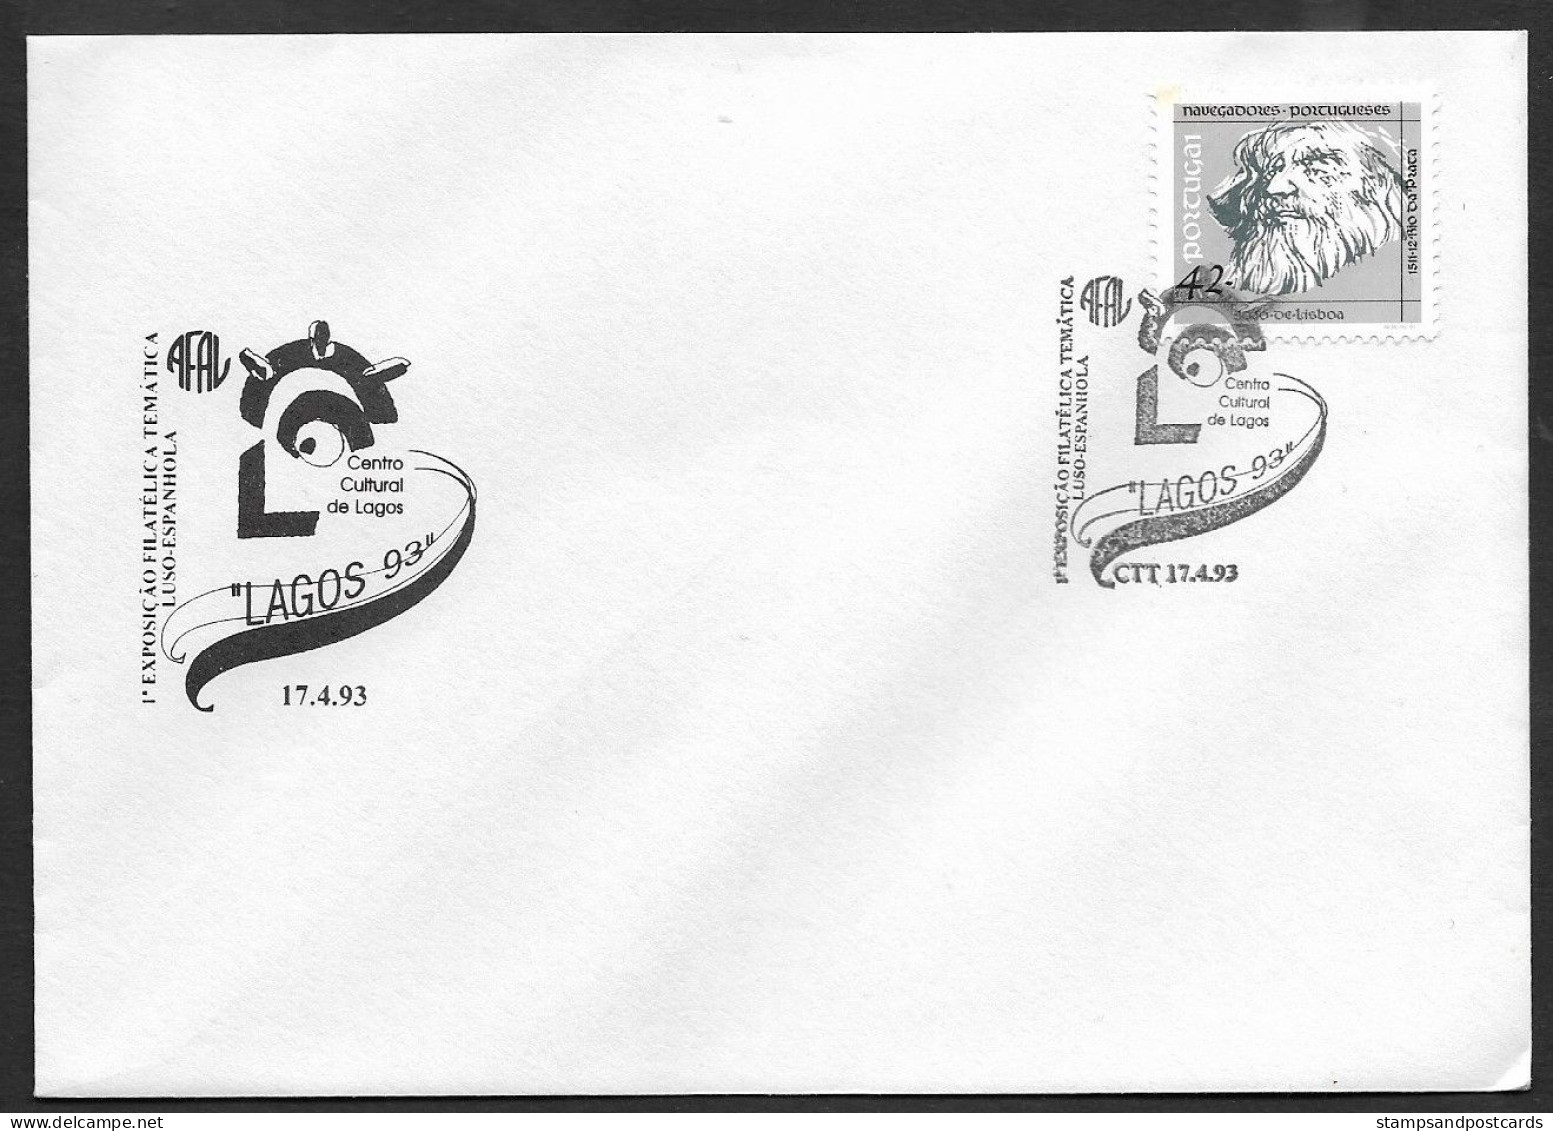 Portugal Lettre Cachet Commemoratif Lagos Algarve Expo Philatelique 1993 Event Cancel Cover Stamp Expo - Postal Logo & Postmarks